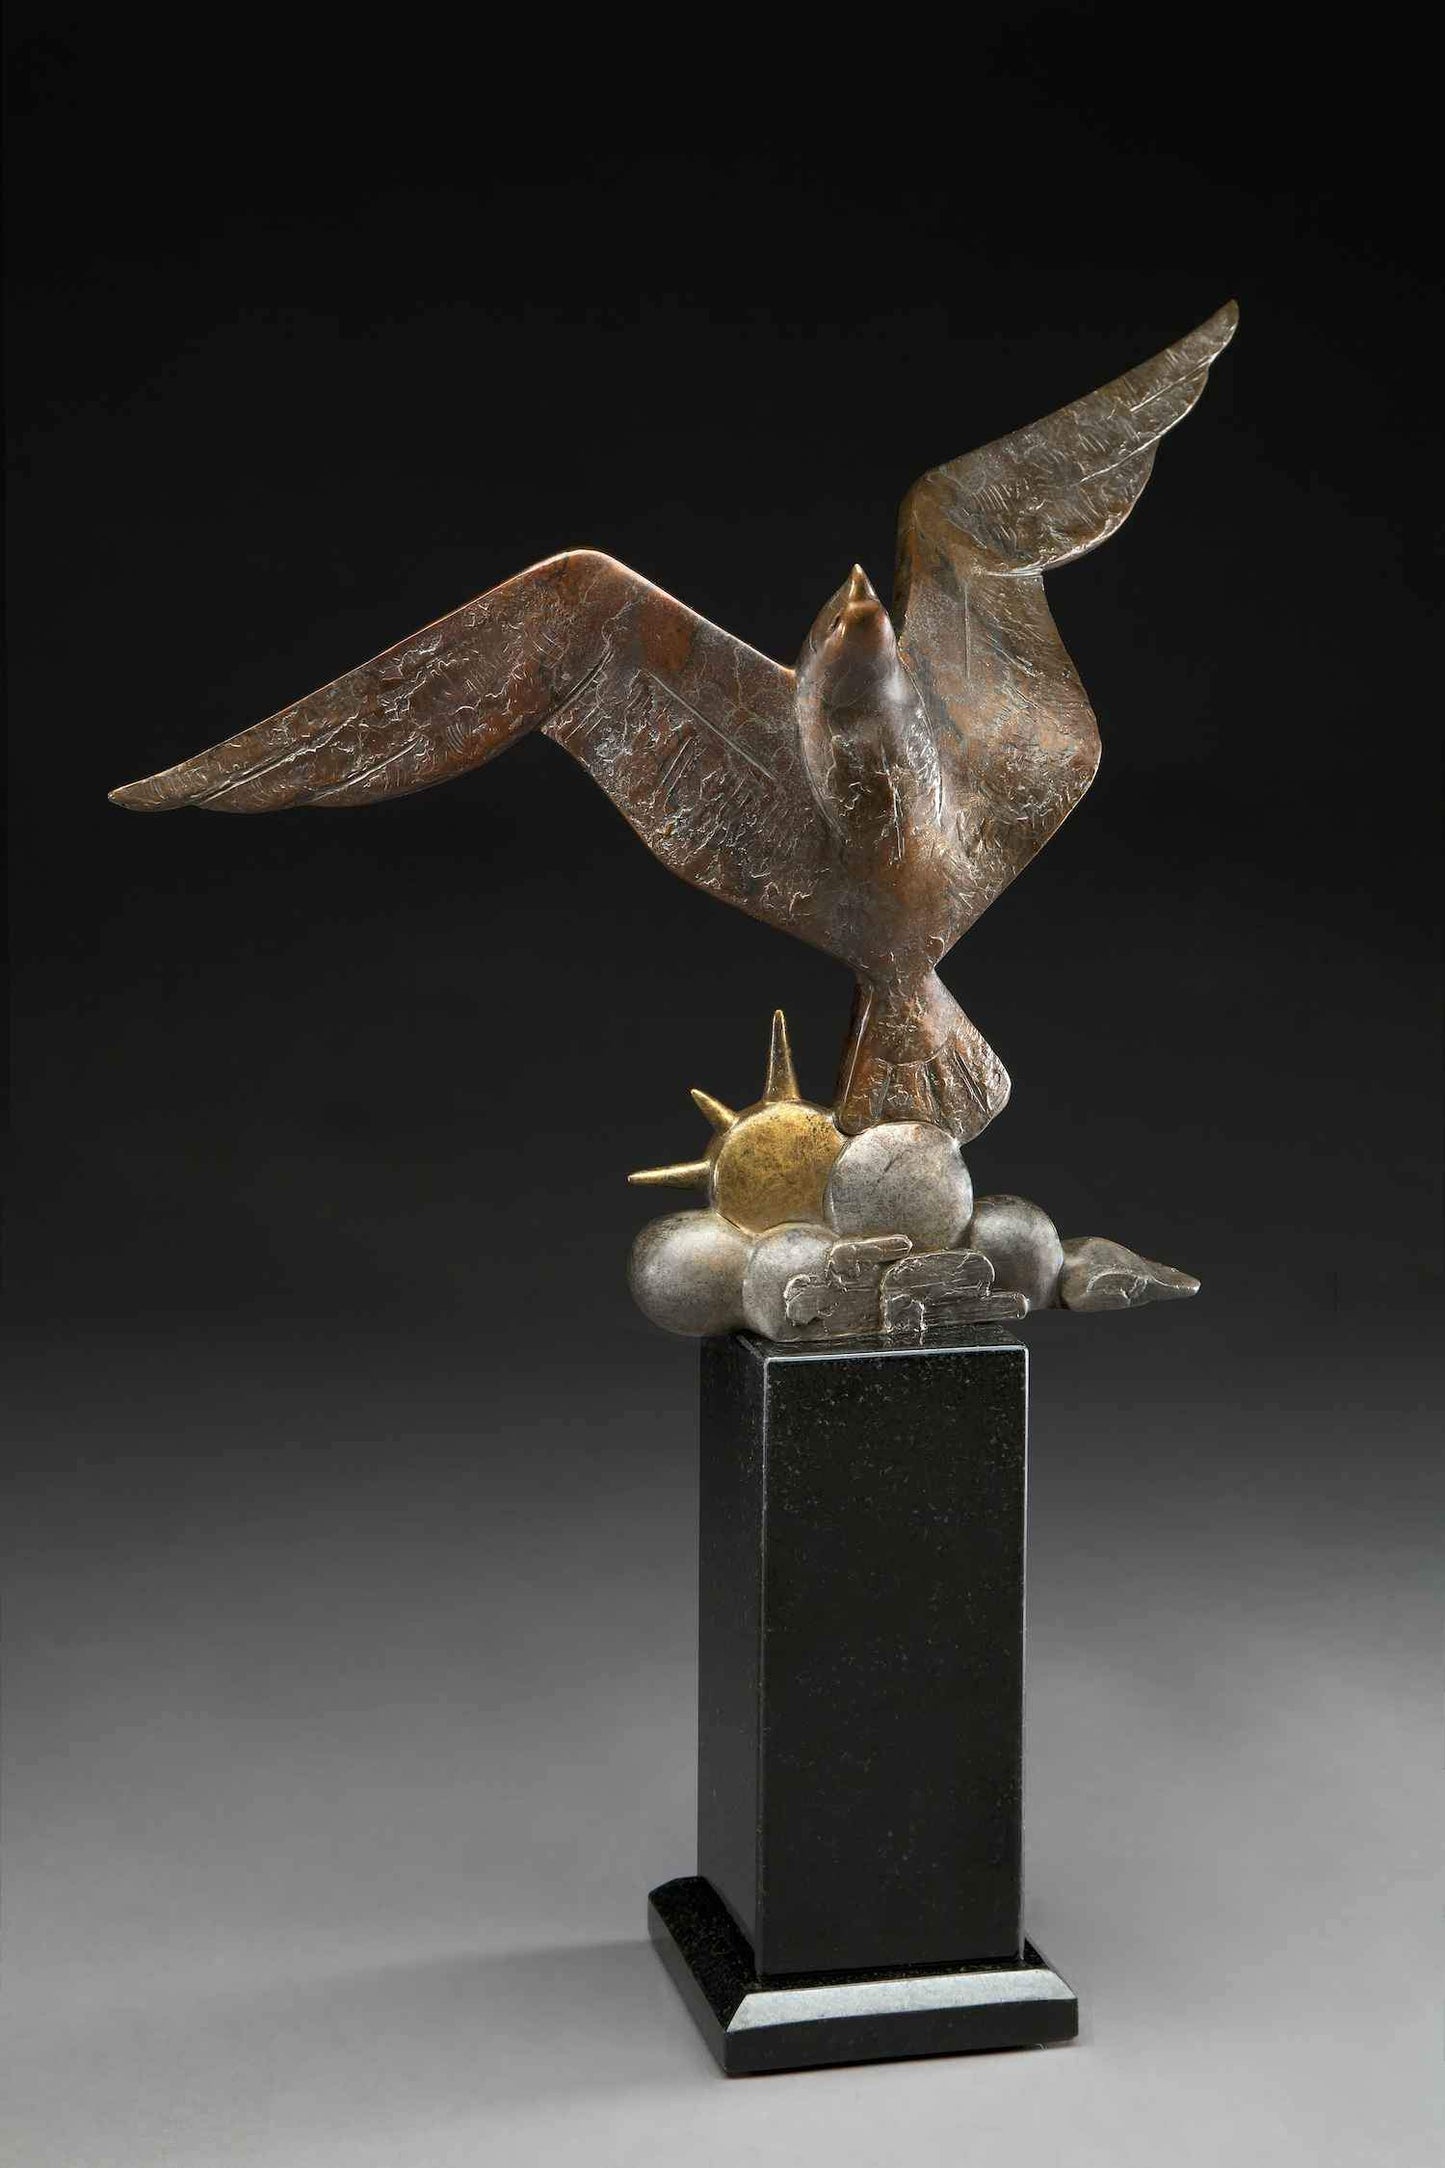 Joy of flight sculpture by Tim Cherry